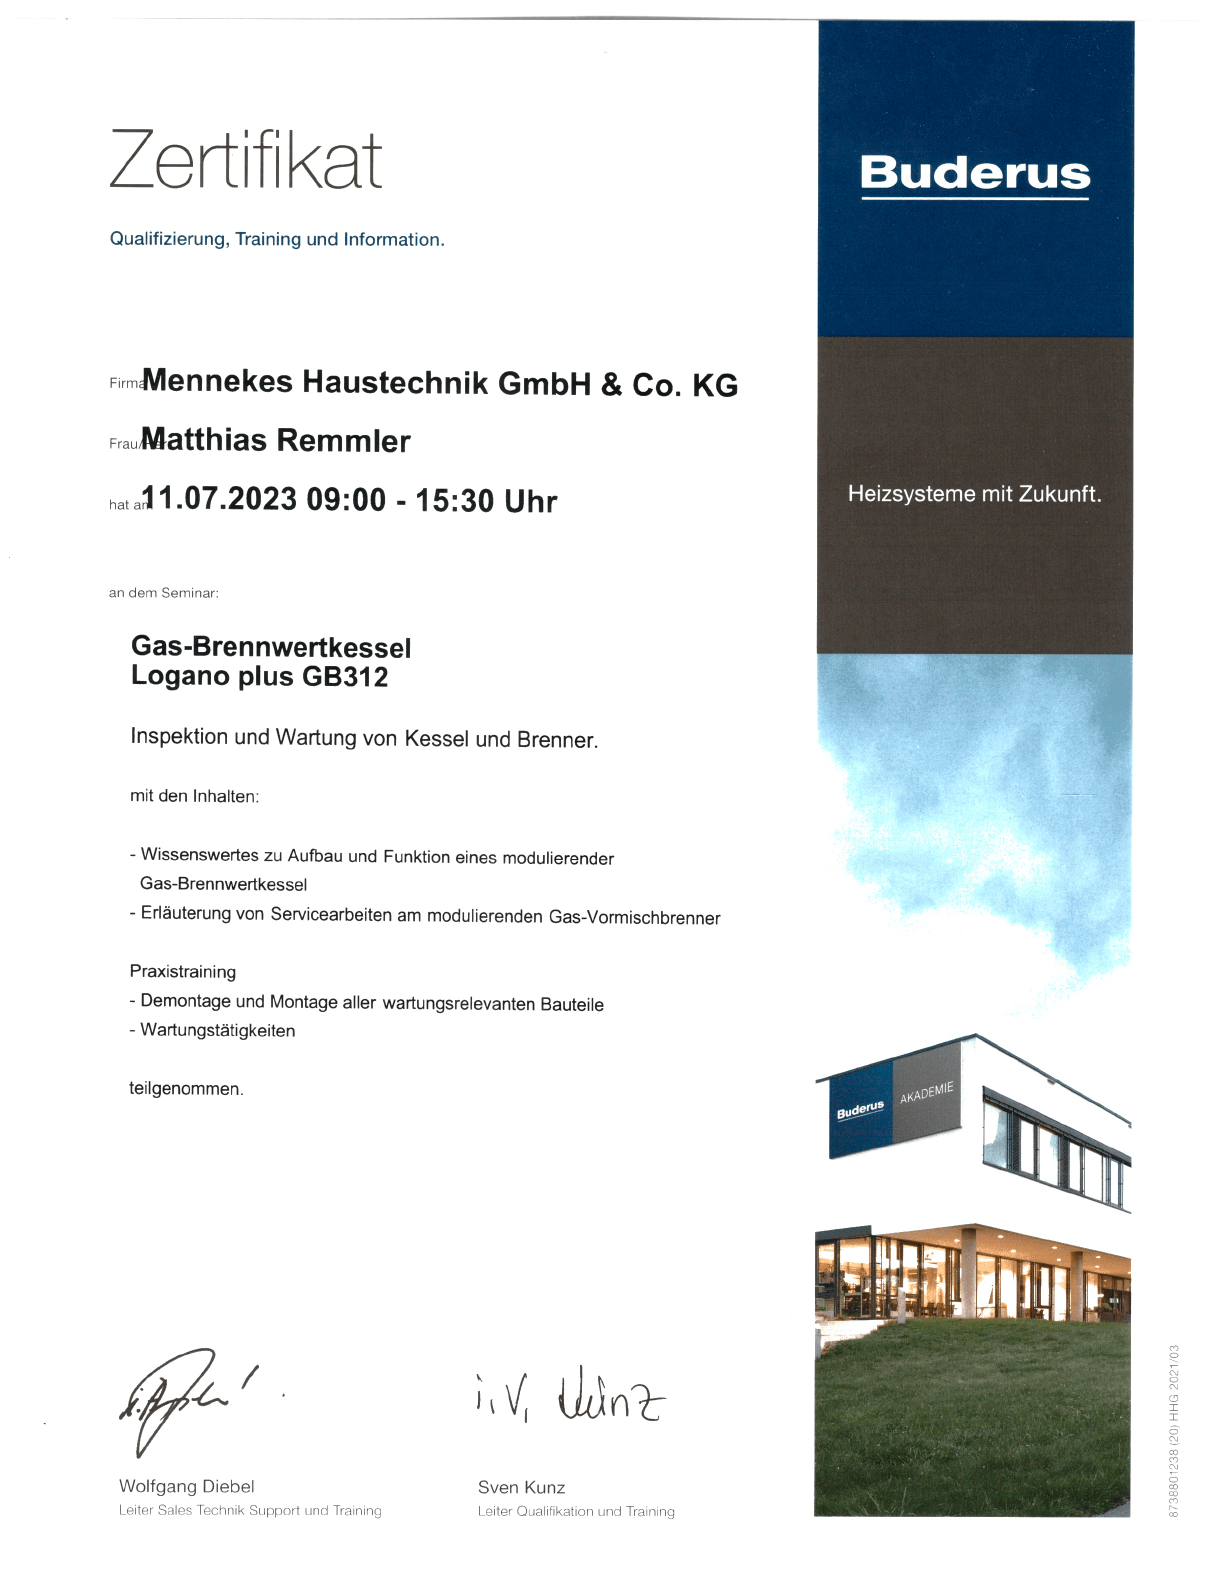 Mennekes Haustechnik GmbH & Co.KG - Zertifikate 3